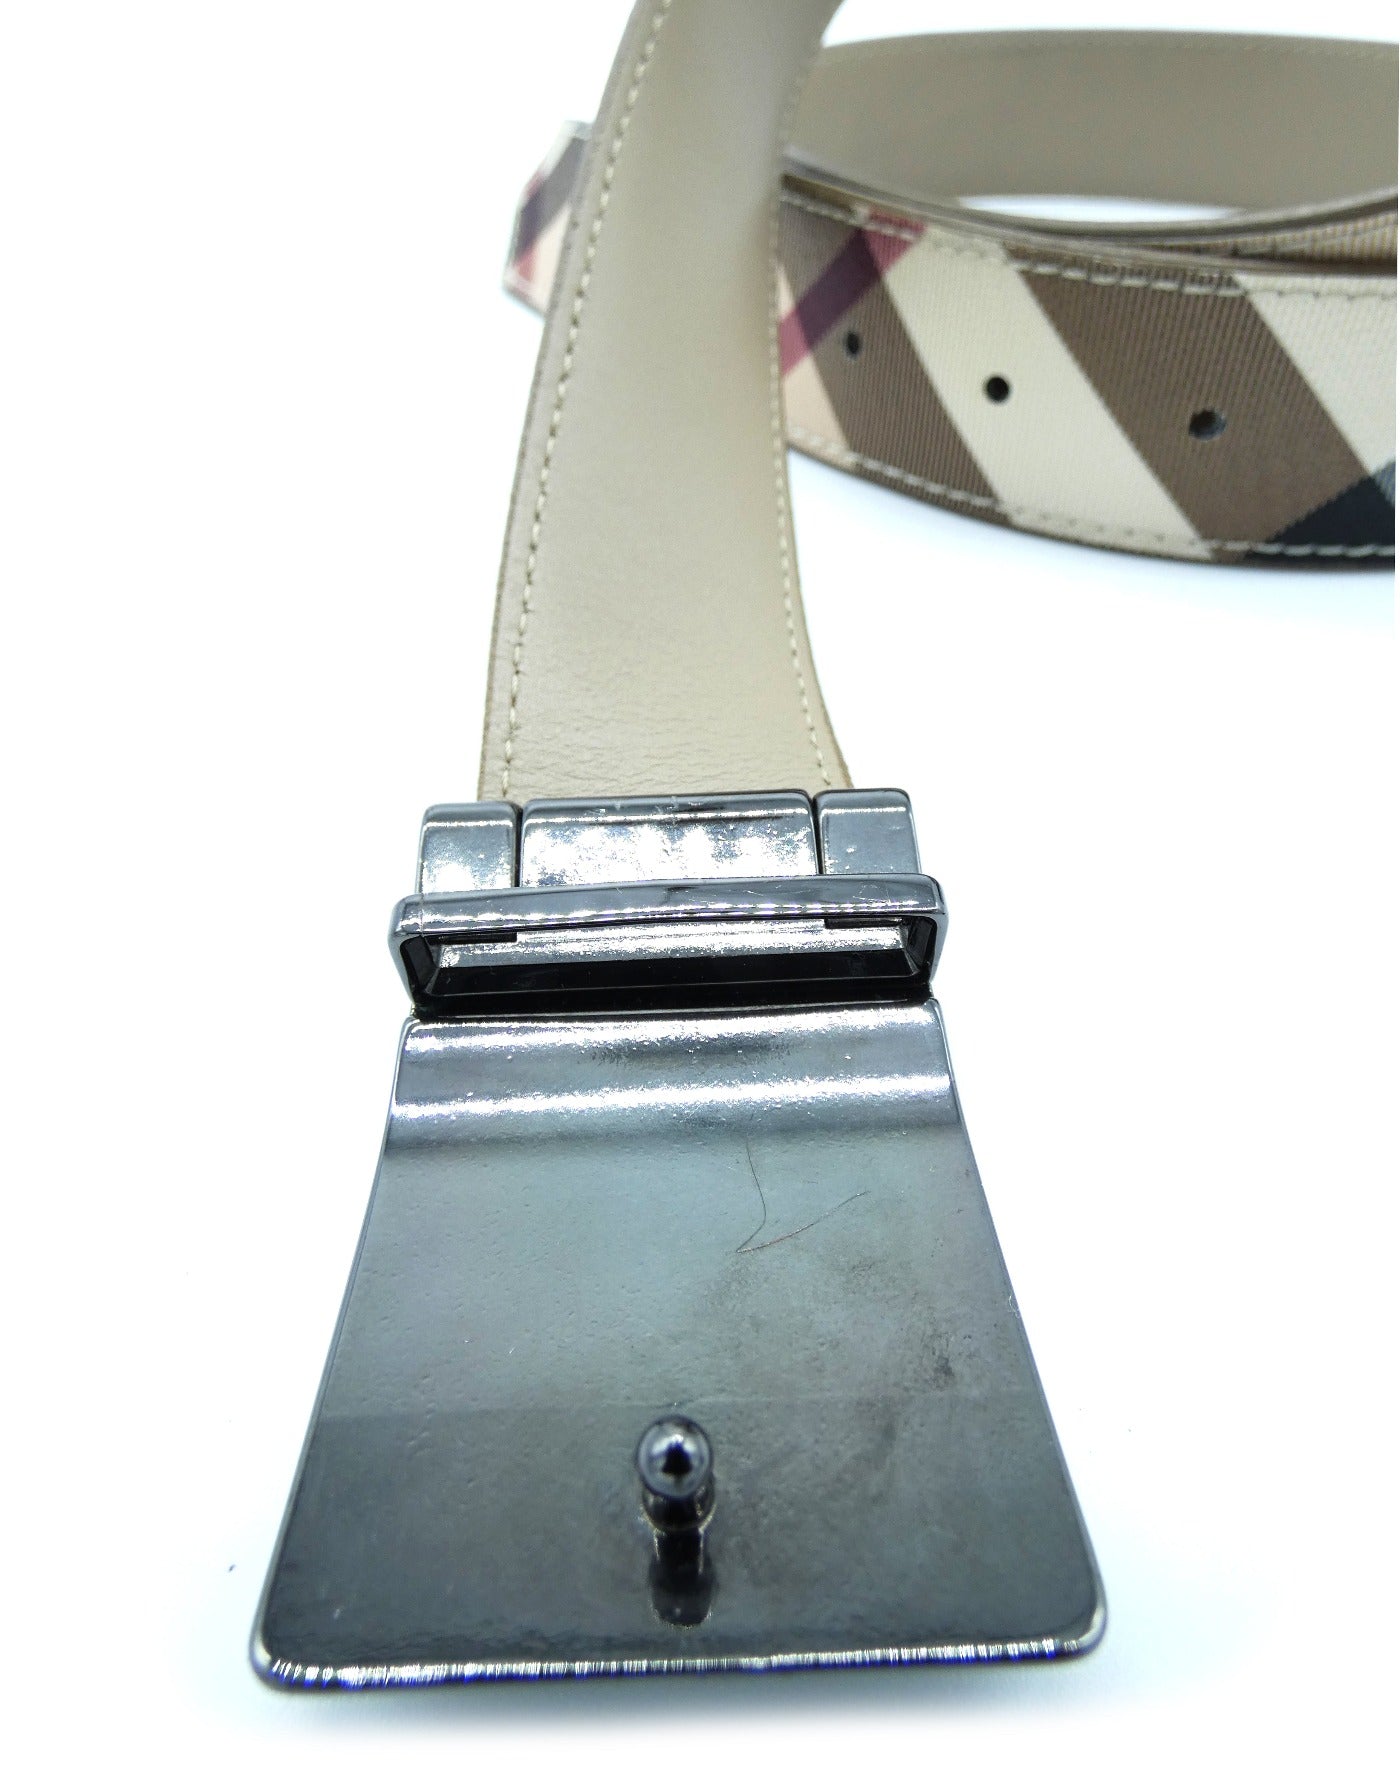 Burberry Nova Check Leather and PVC Belt Belt Burberry